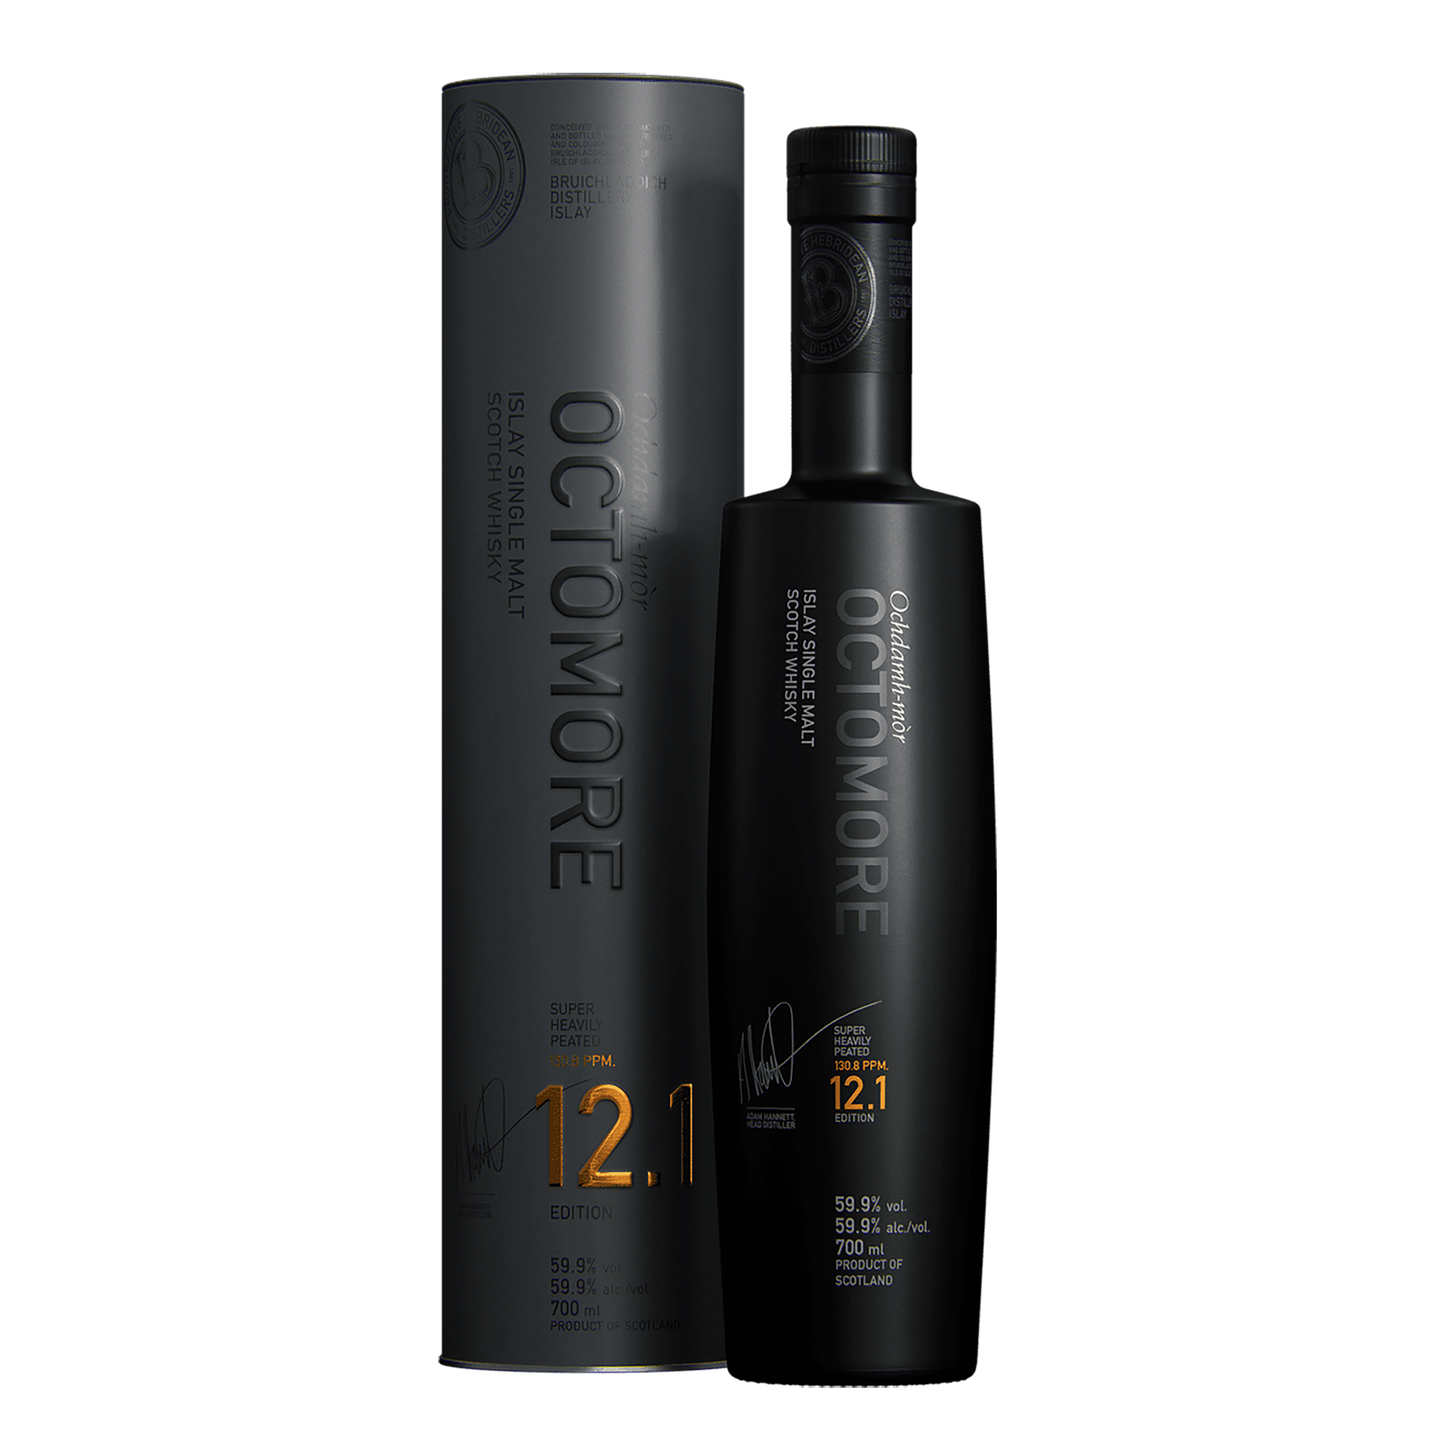 Bruichladdich Octomore 12.1 Cask Strength Single Malt Scotch Whisky 700ml - CBD Cellars